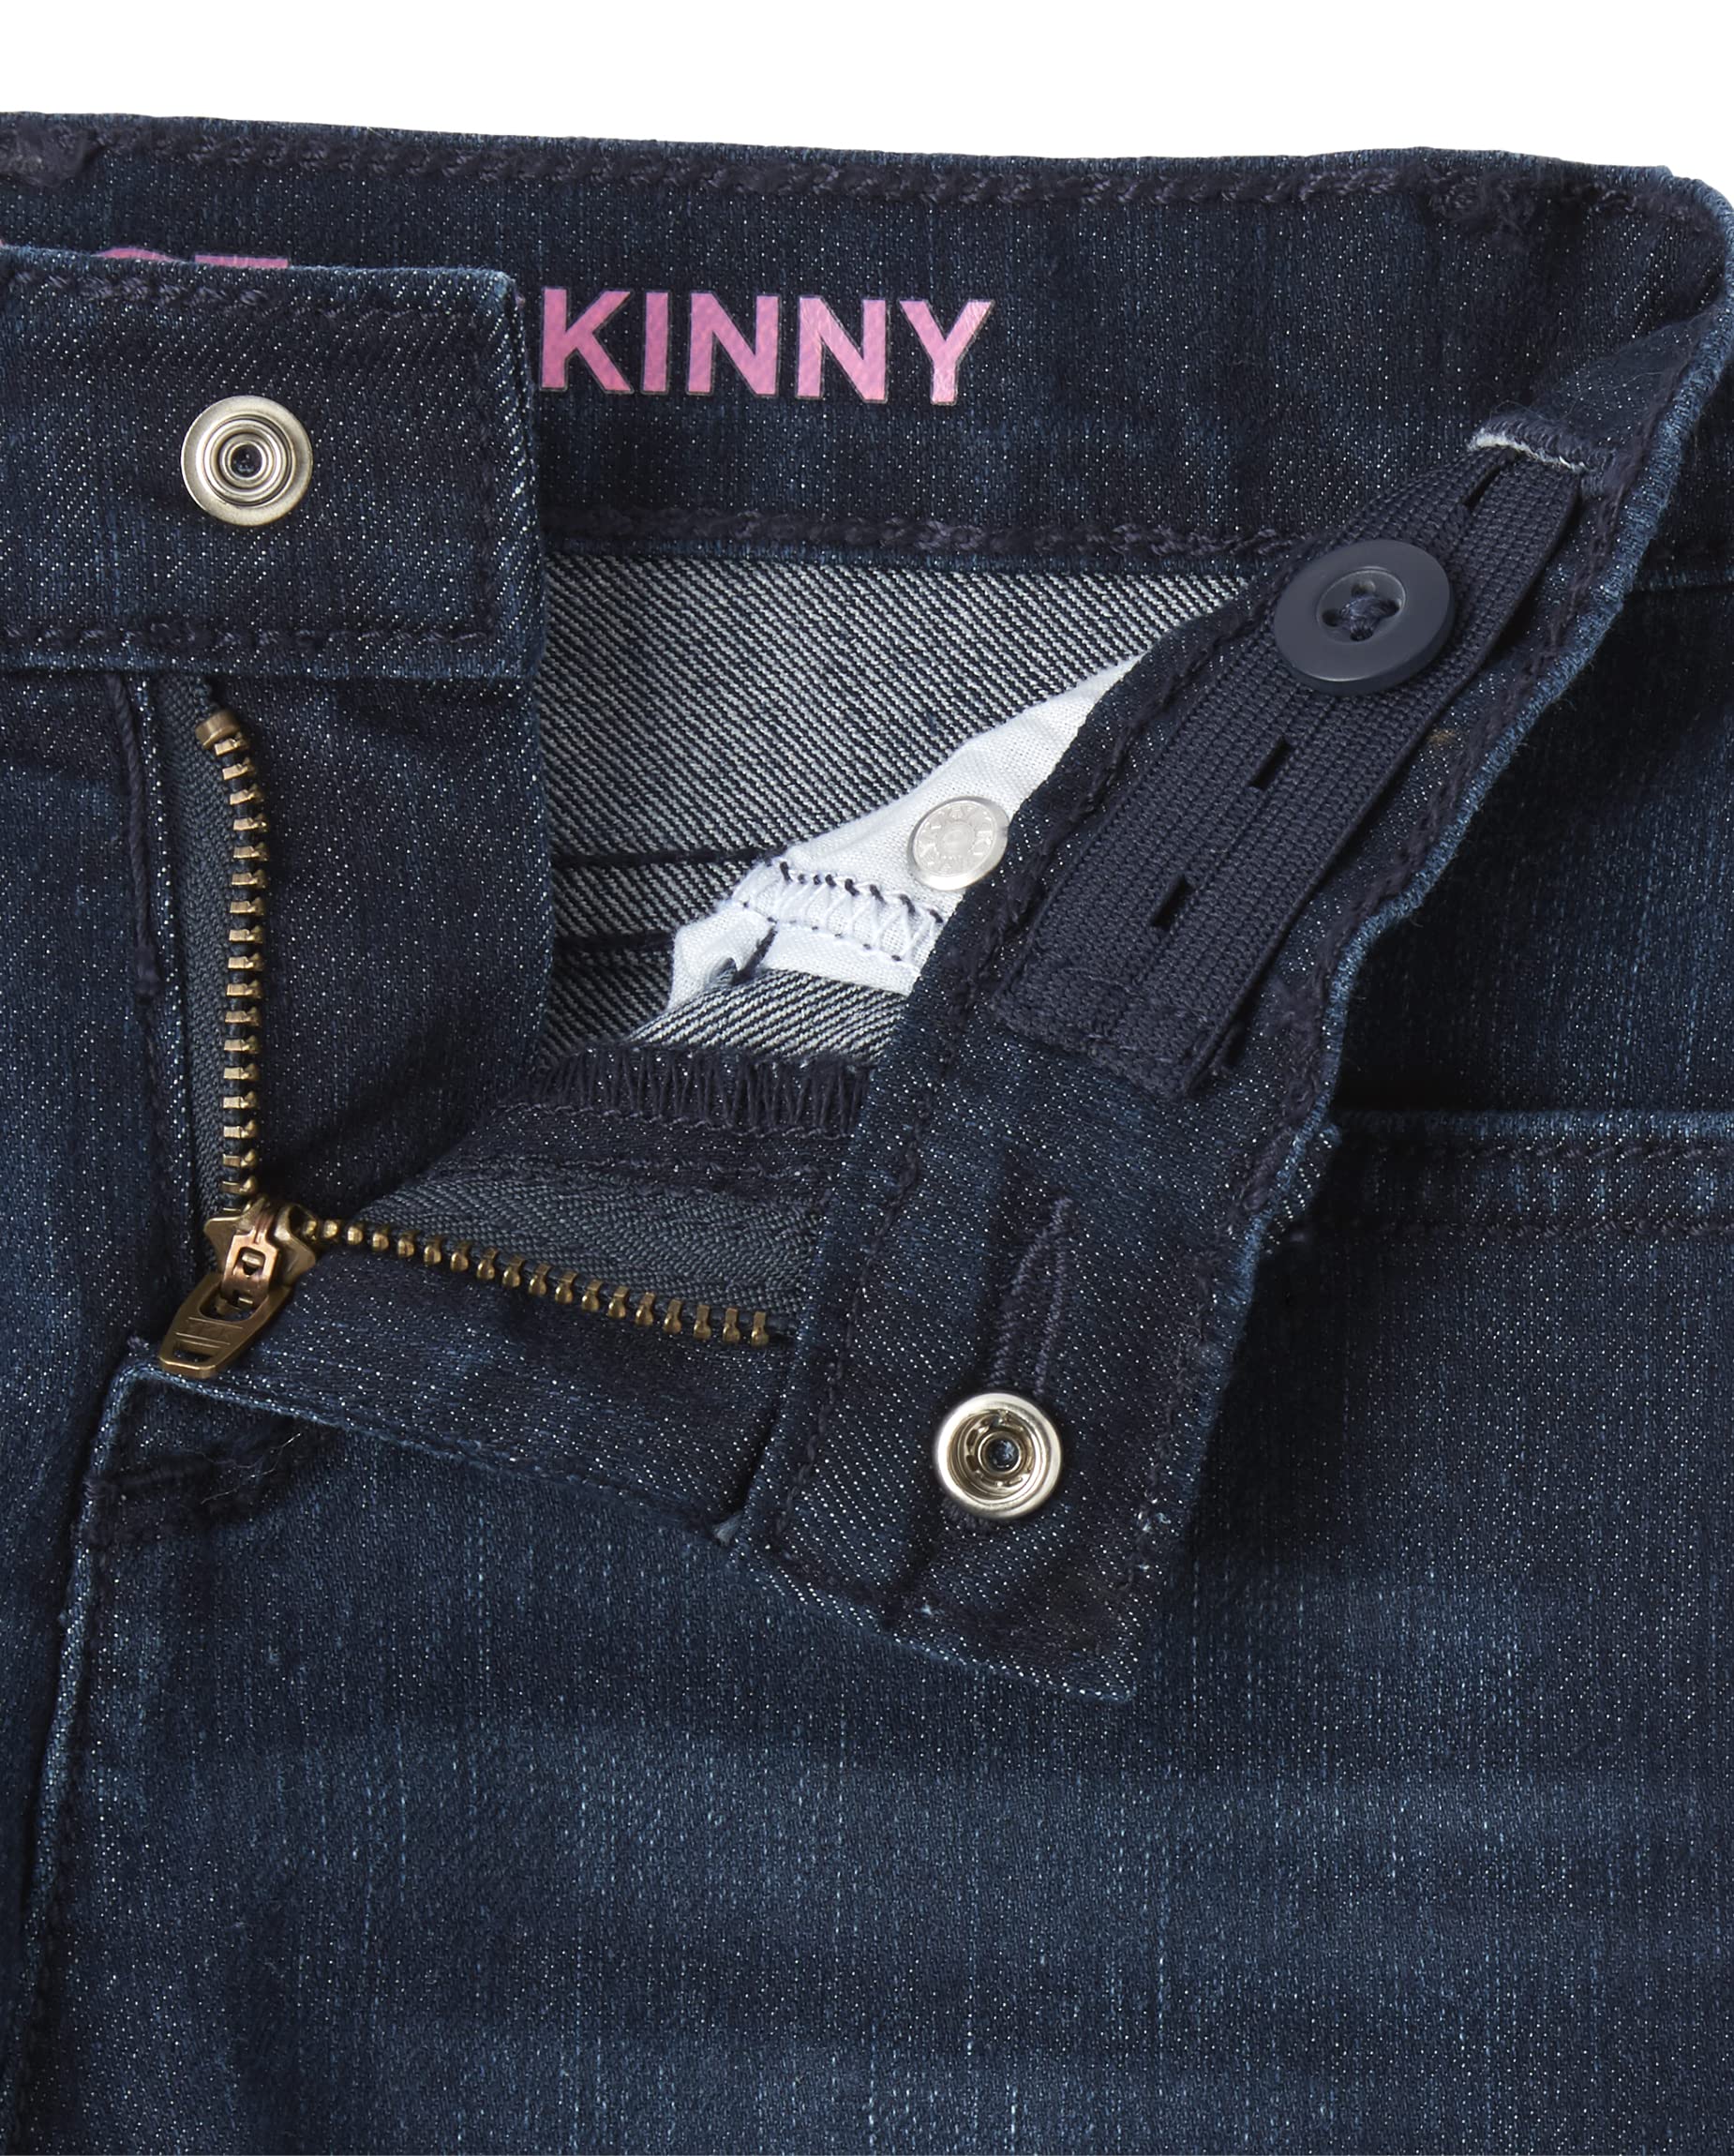 The Children's Place Girls' Basic Skinny Jeans